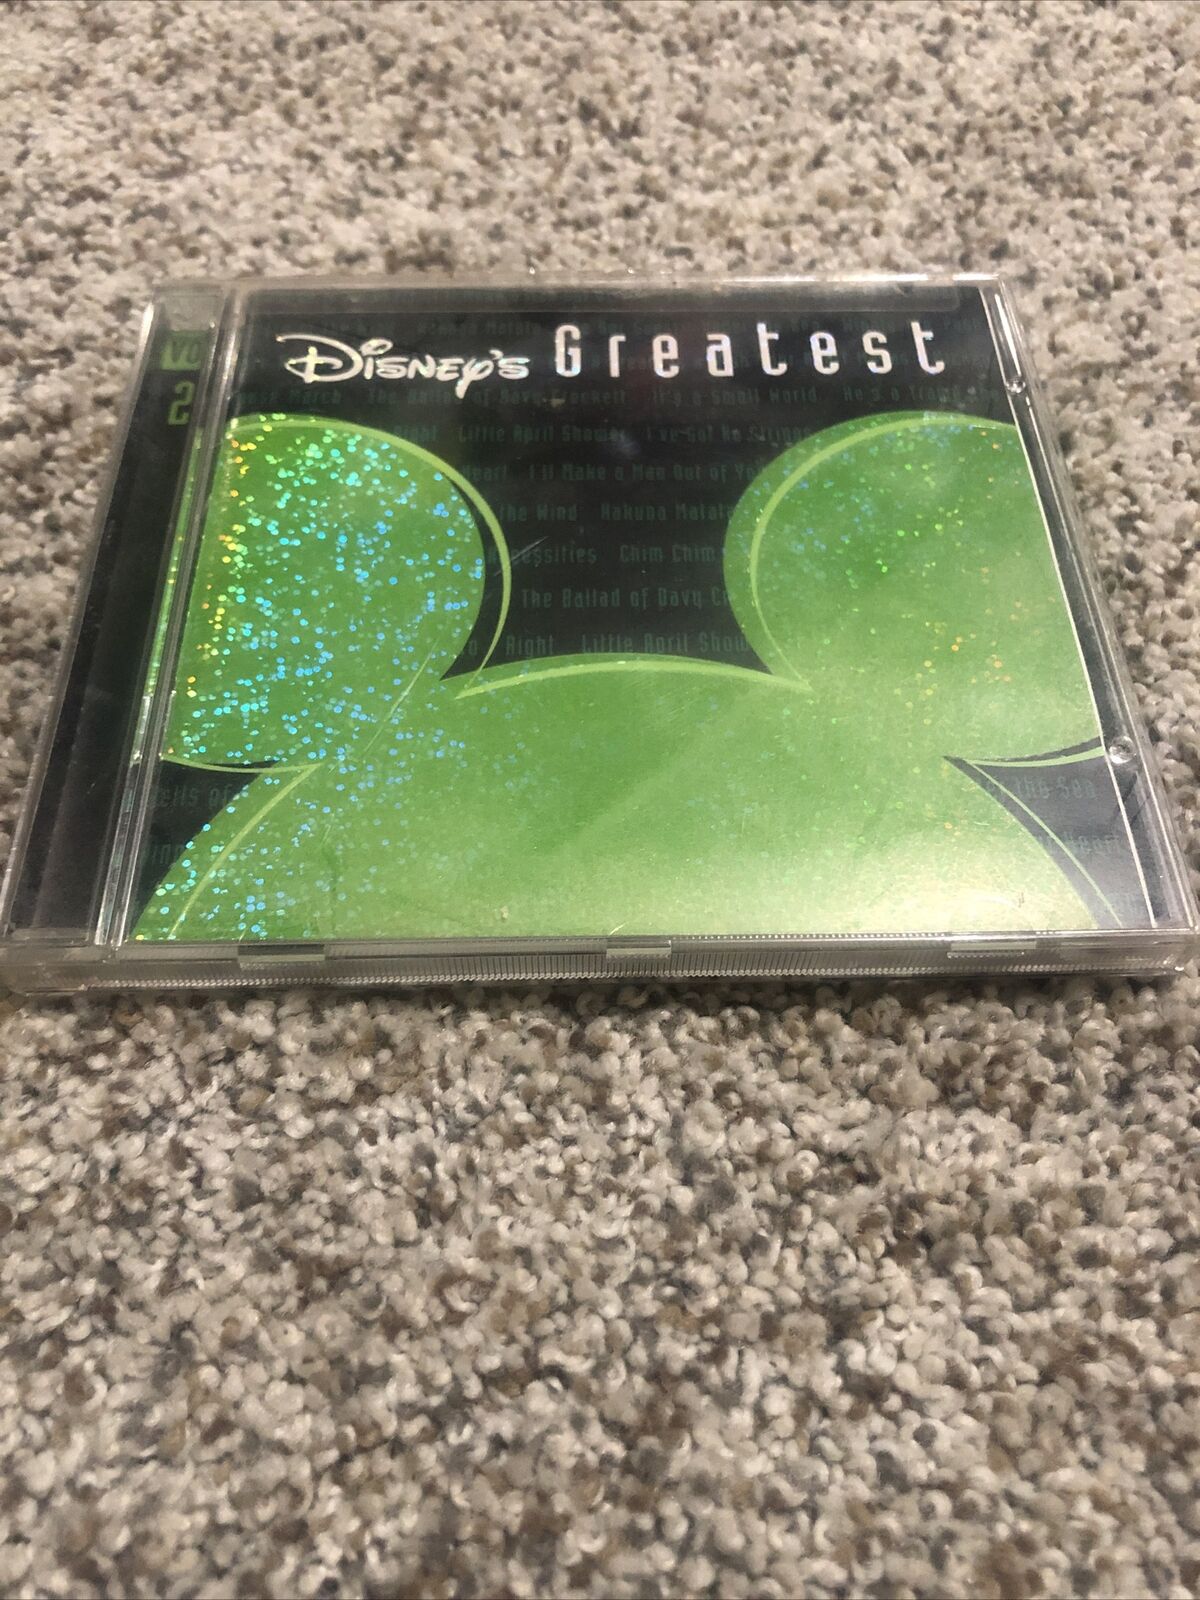 Disney\'s Greatest, Vol. 2 (Audio CD Jan-2010, Disney)